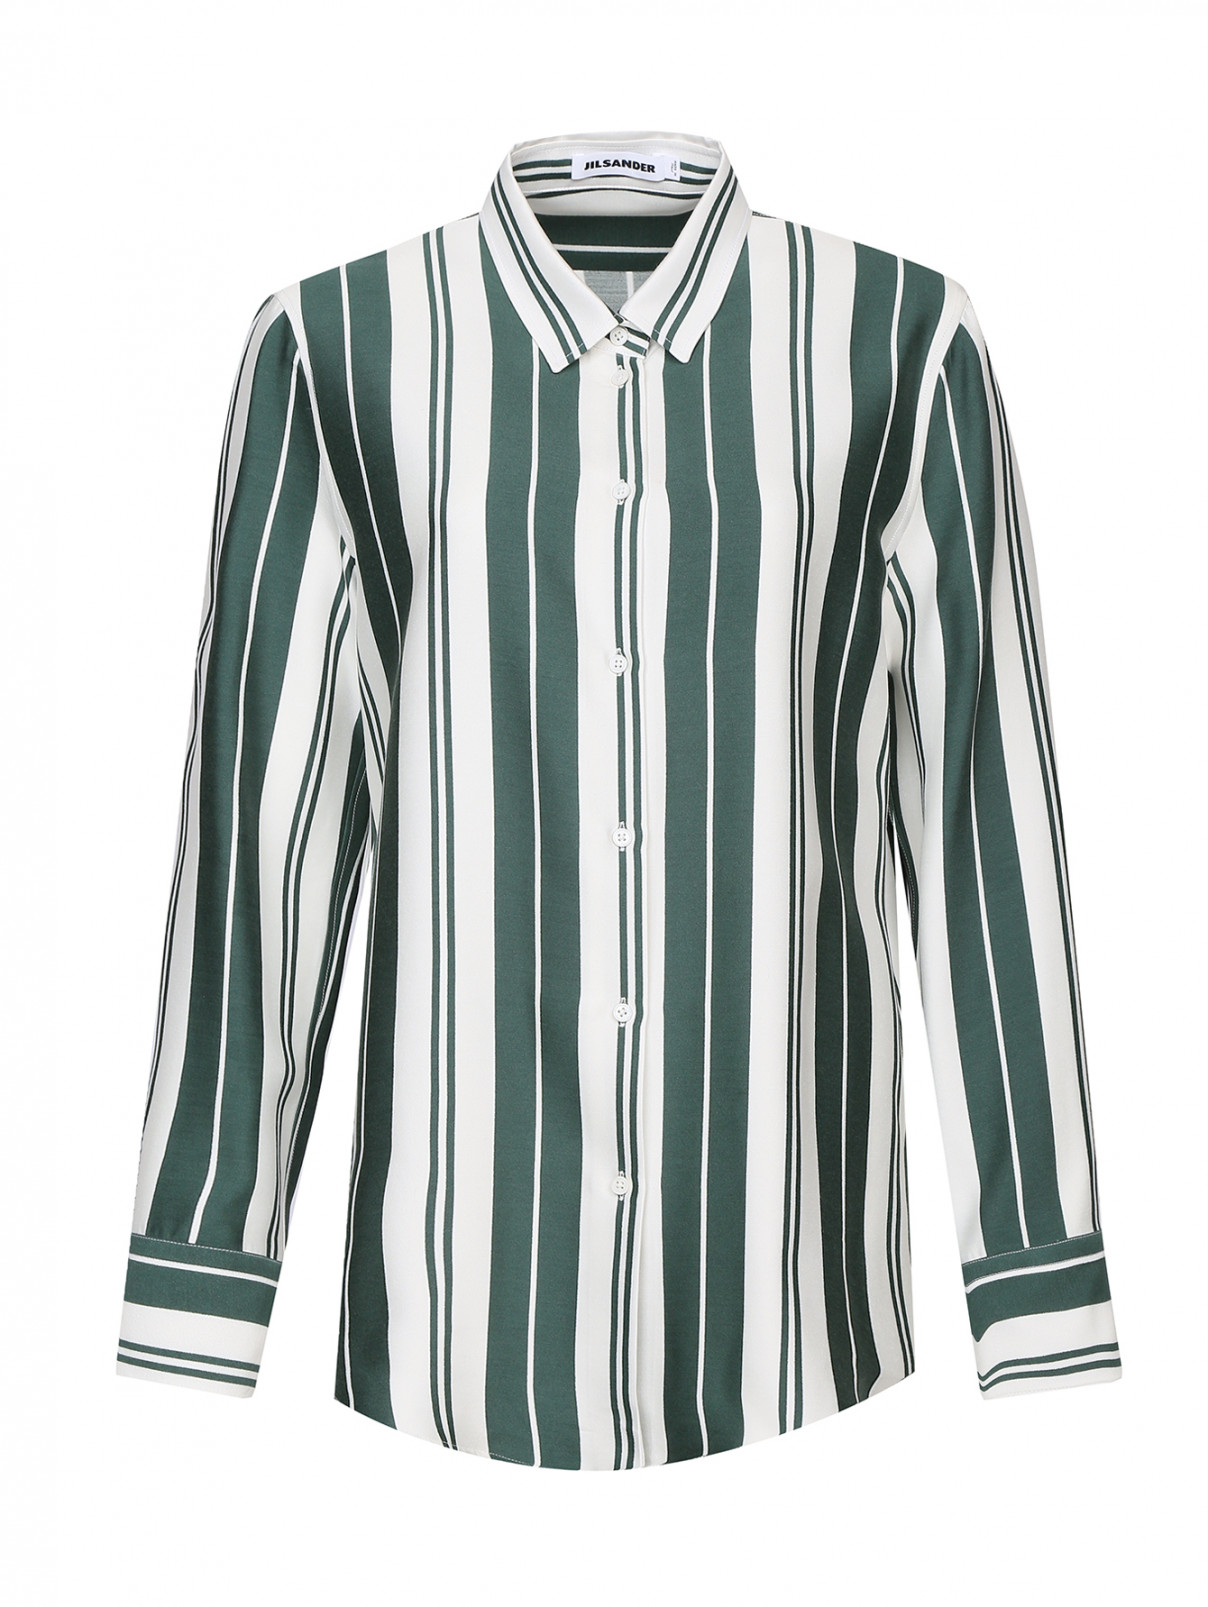 Блуза на пуговицах с узором "полоска" Jil Sander  –  Общий вид  – Цвет:  Узор